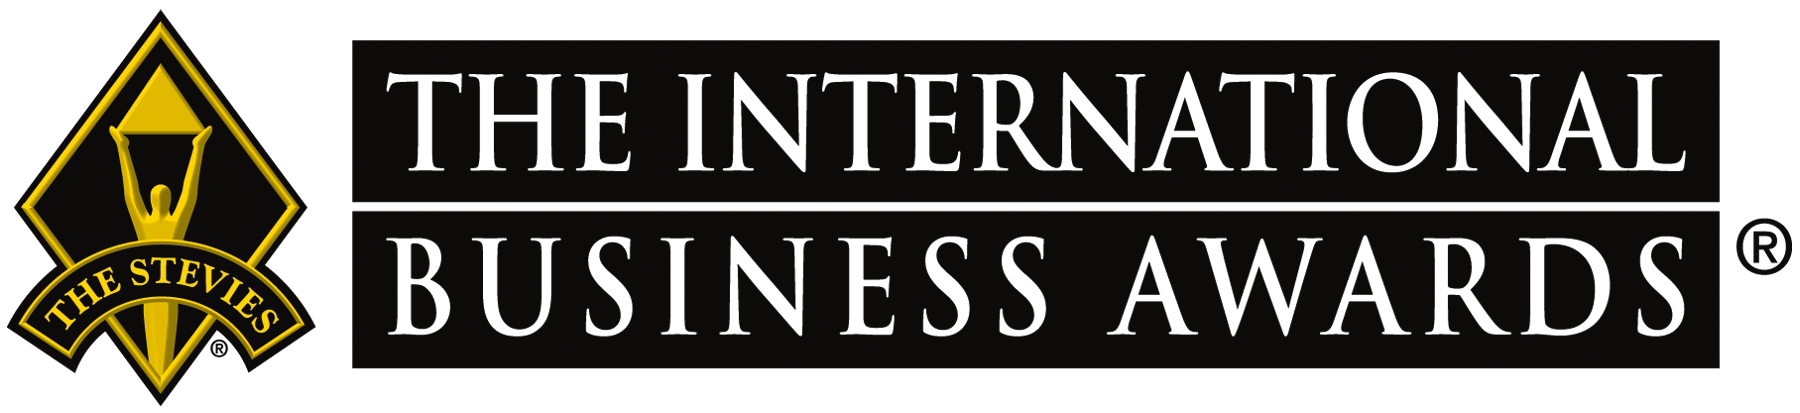 International Business Awards (Stevies) logo